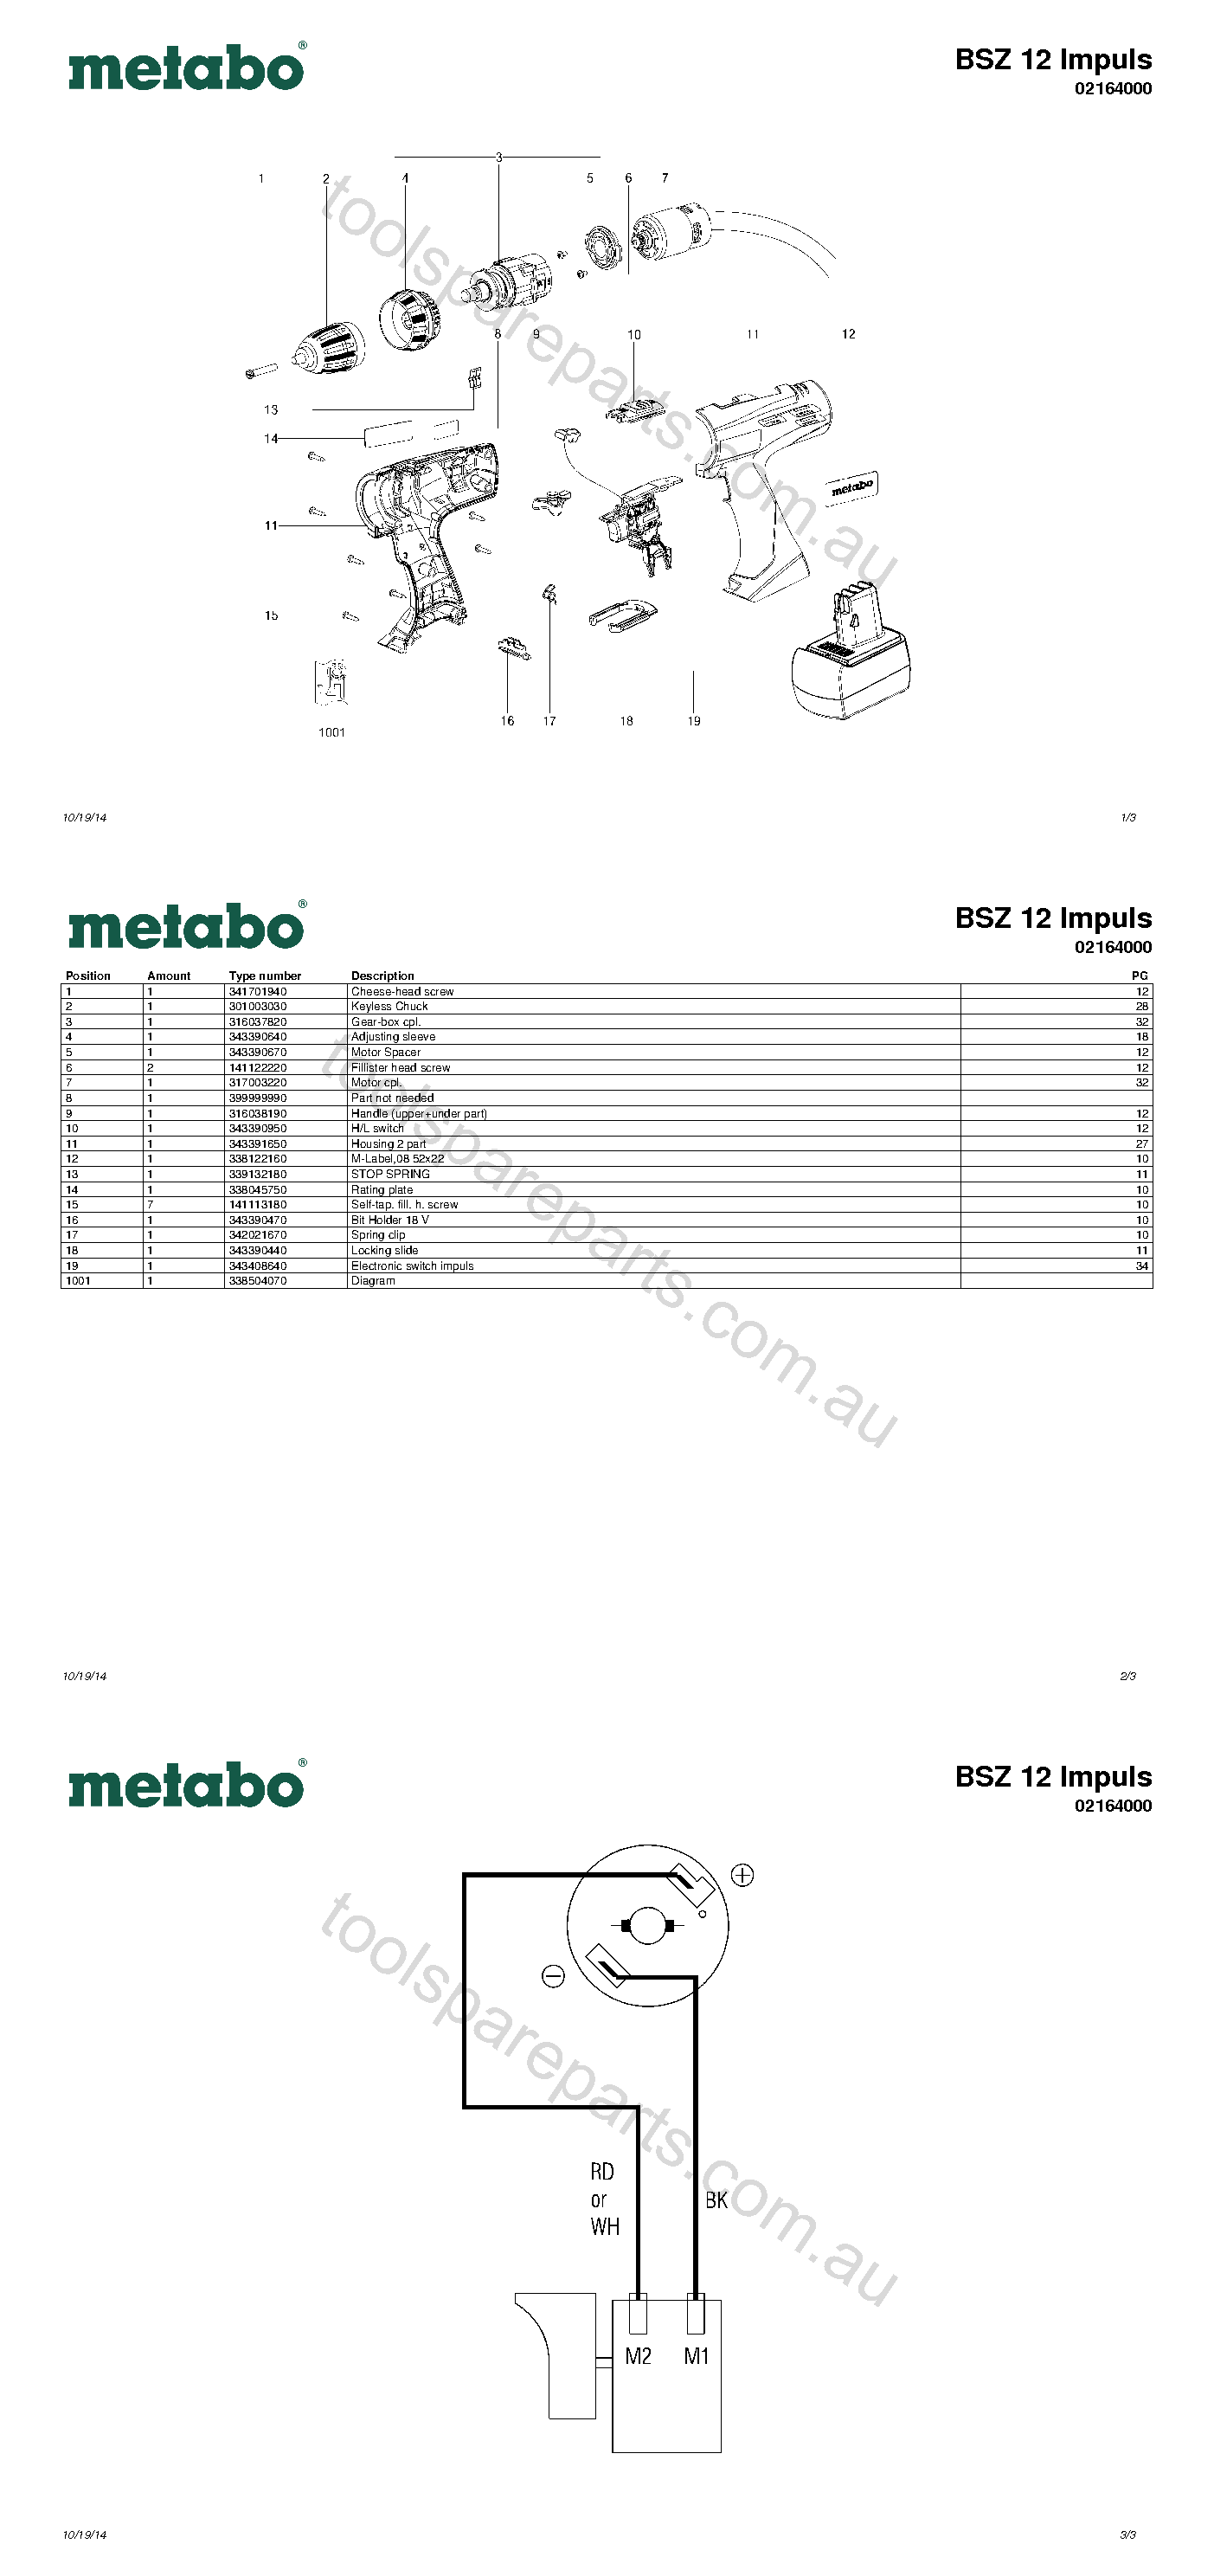 Metabo BSZ 12 Impuls 02164000  Diagram 1